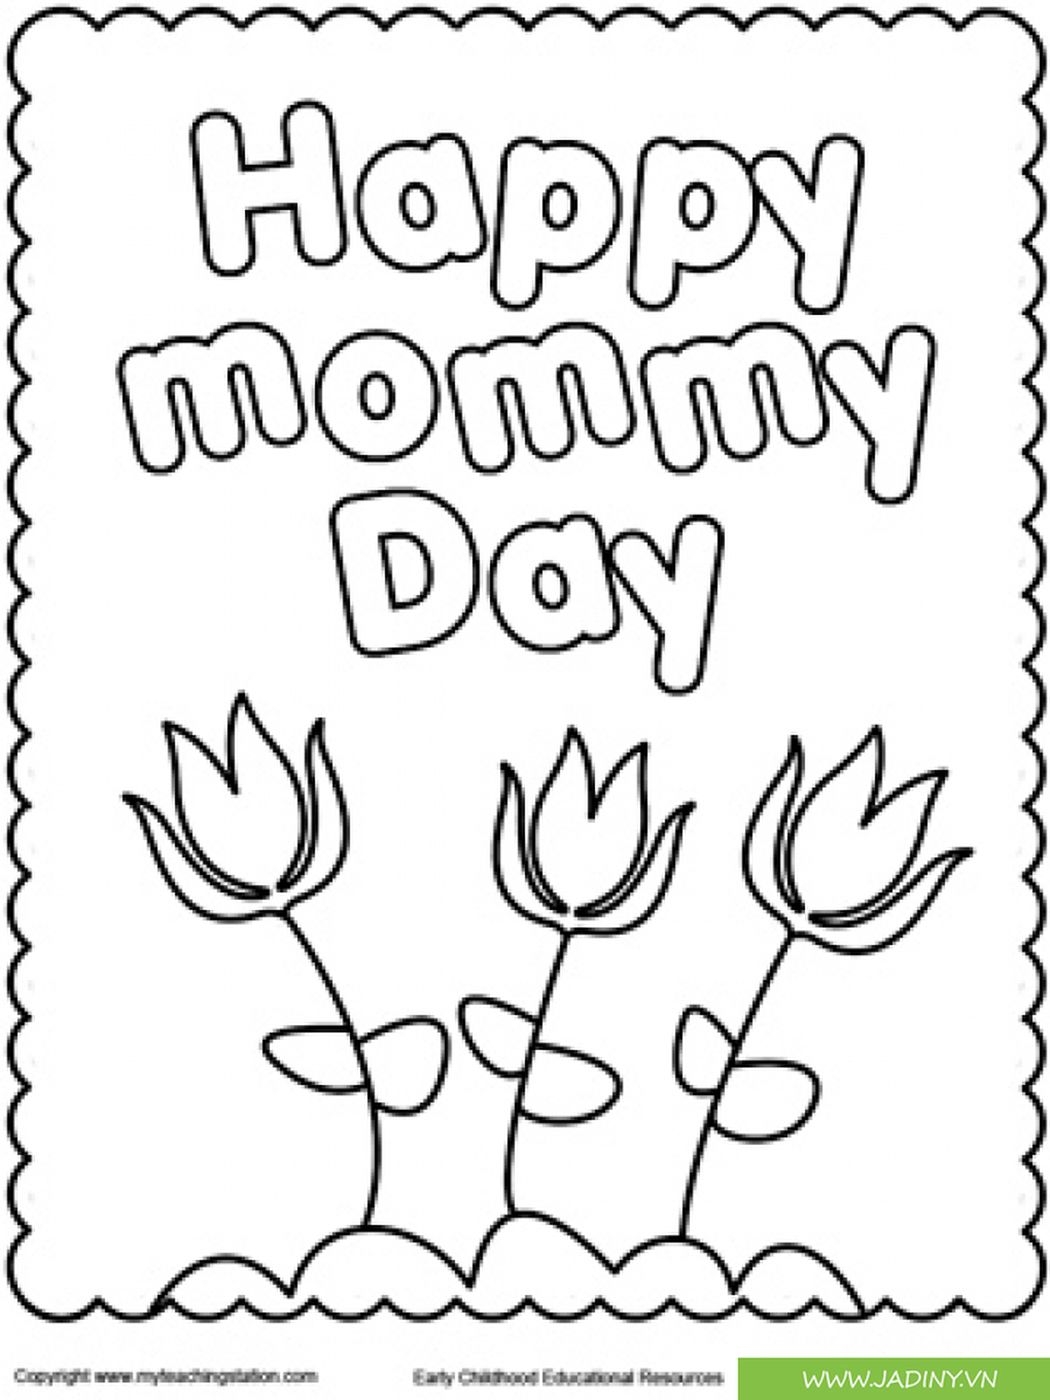 8 march worksheets for kids. Раскраска ко Дню матери. Открытка для мамы раскраска. Открытка ко Дню матери раскраска. Картинки ко Дню матери раскраски.